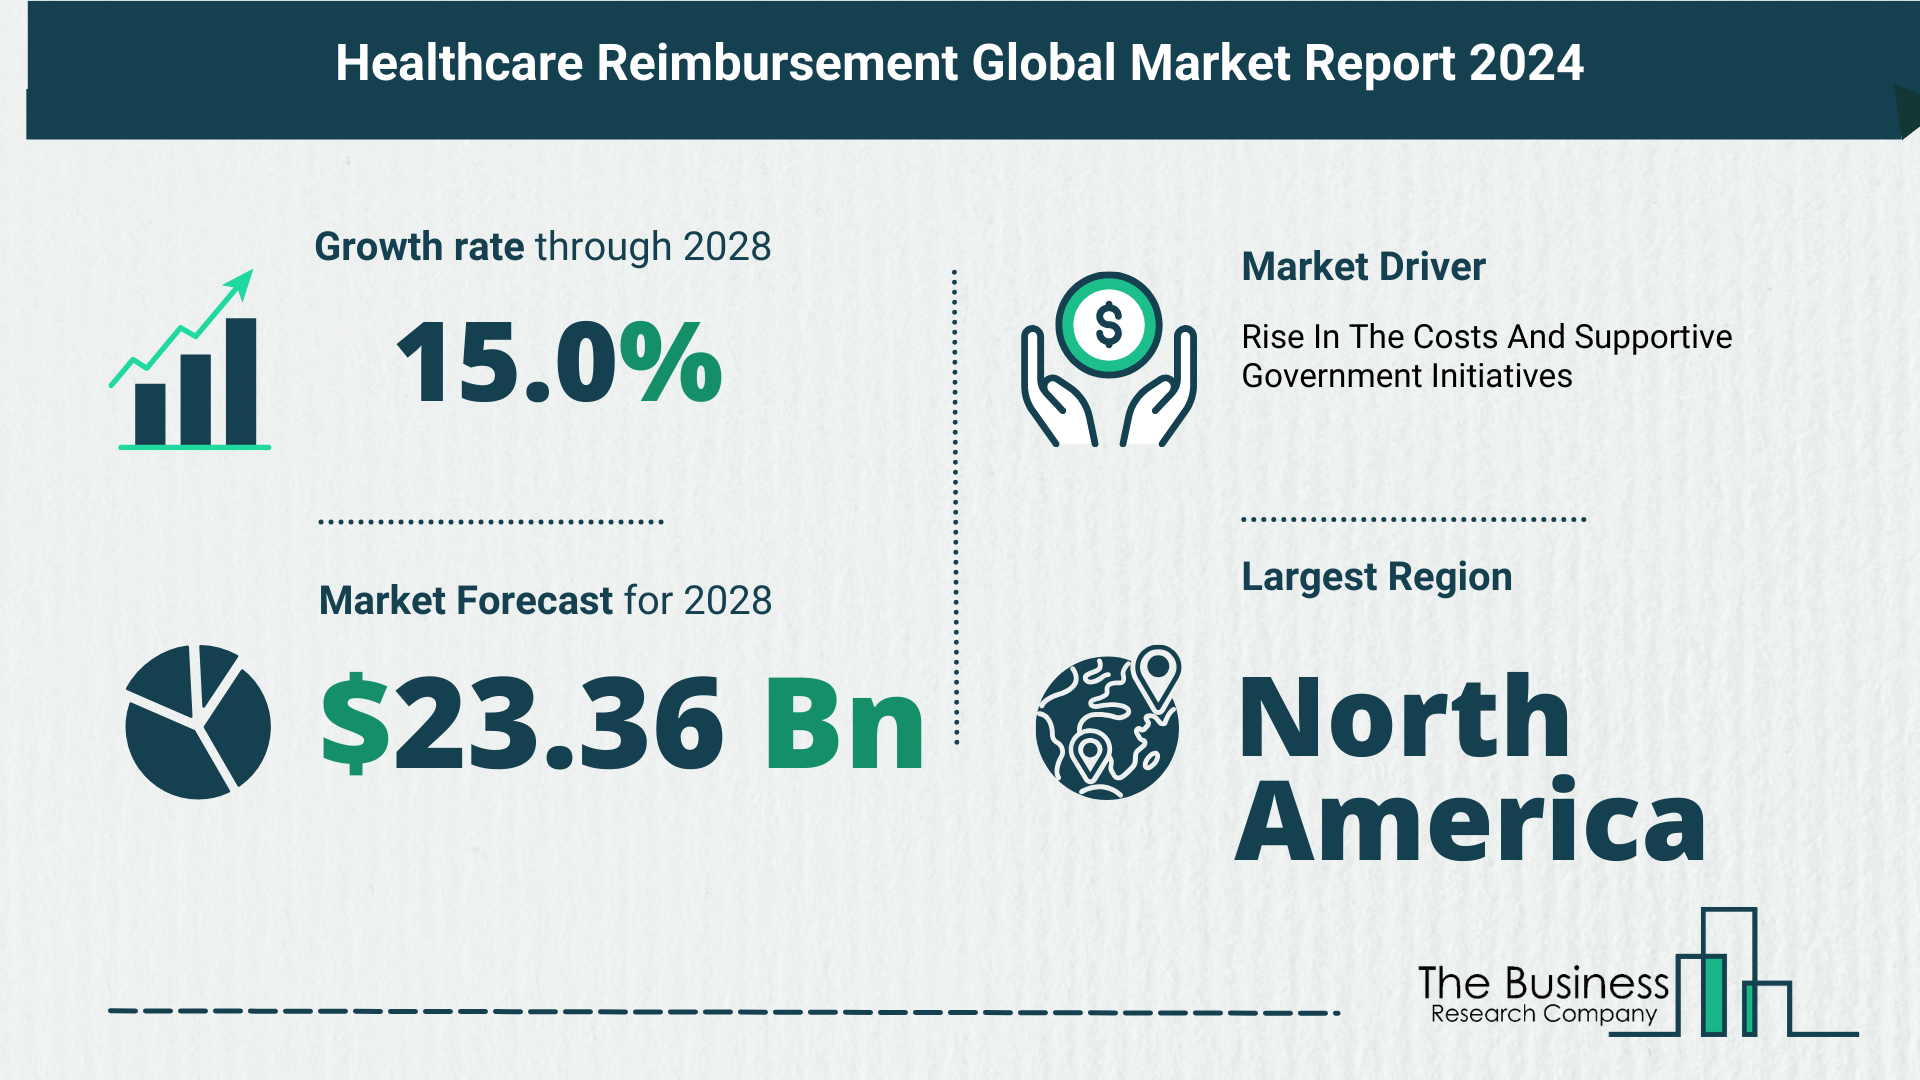 Understand How The Healthcare Reimbursement Market Is Poised To Grow Through 2024-2033